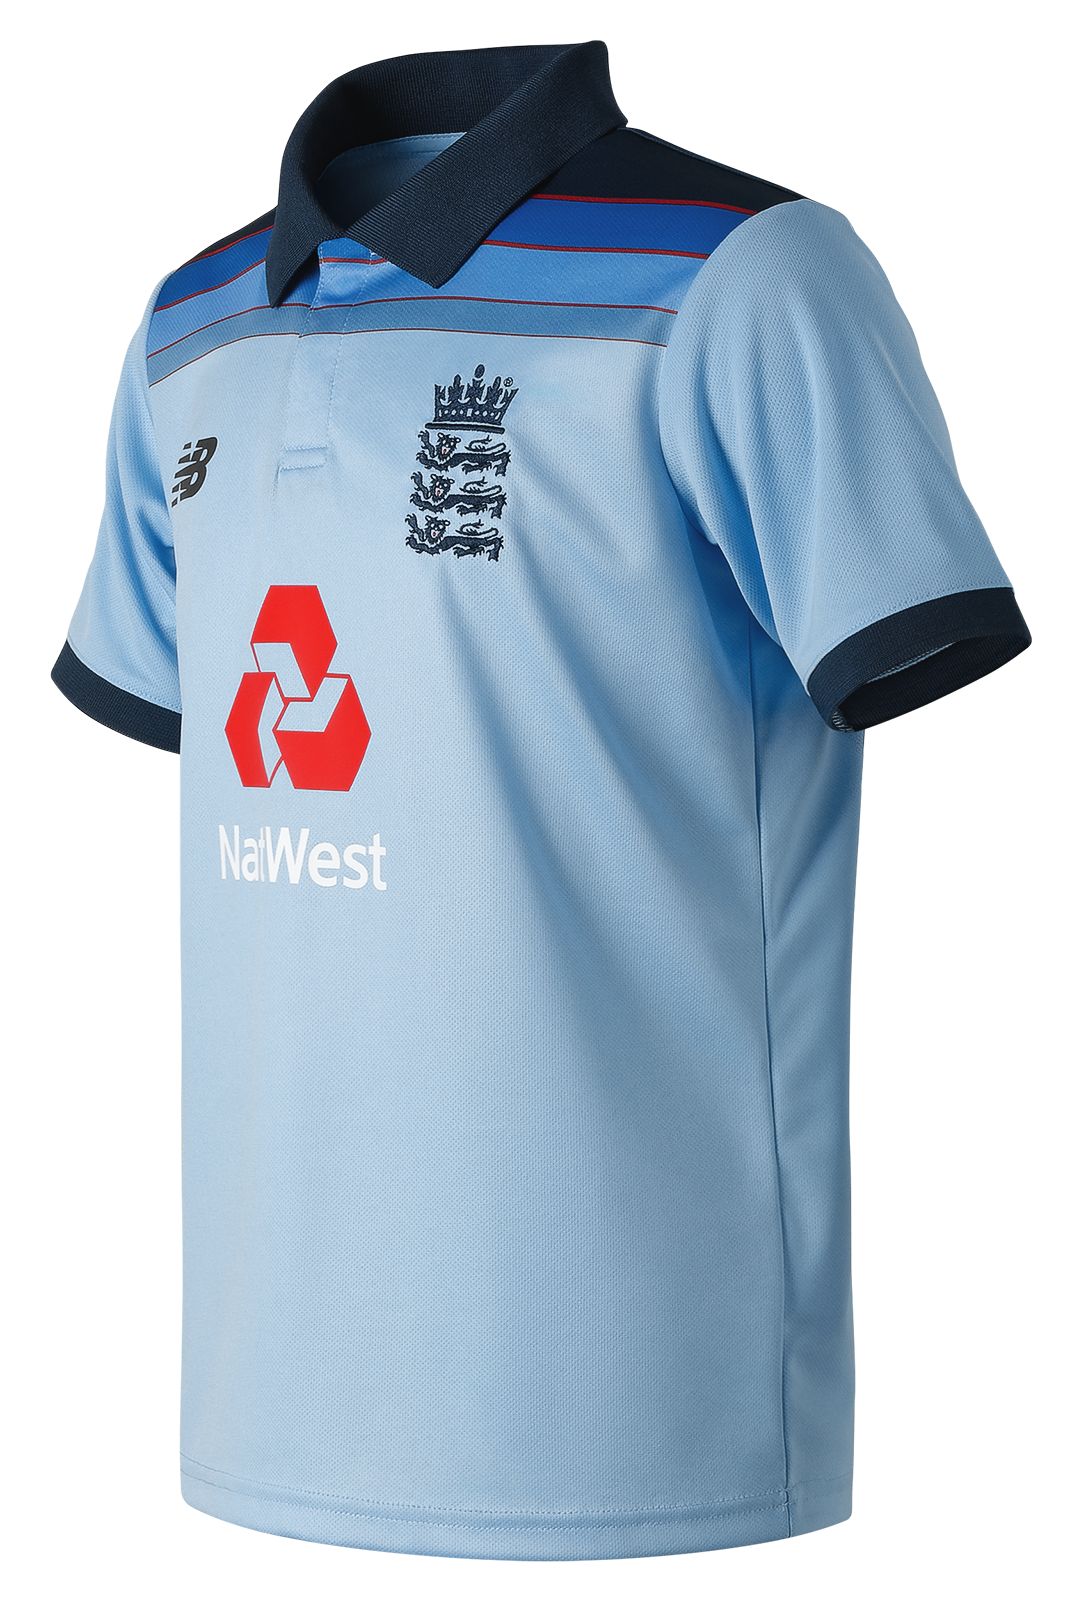 ECB - England Cricket Shirts \u0026 Training 